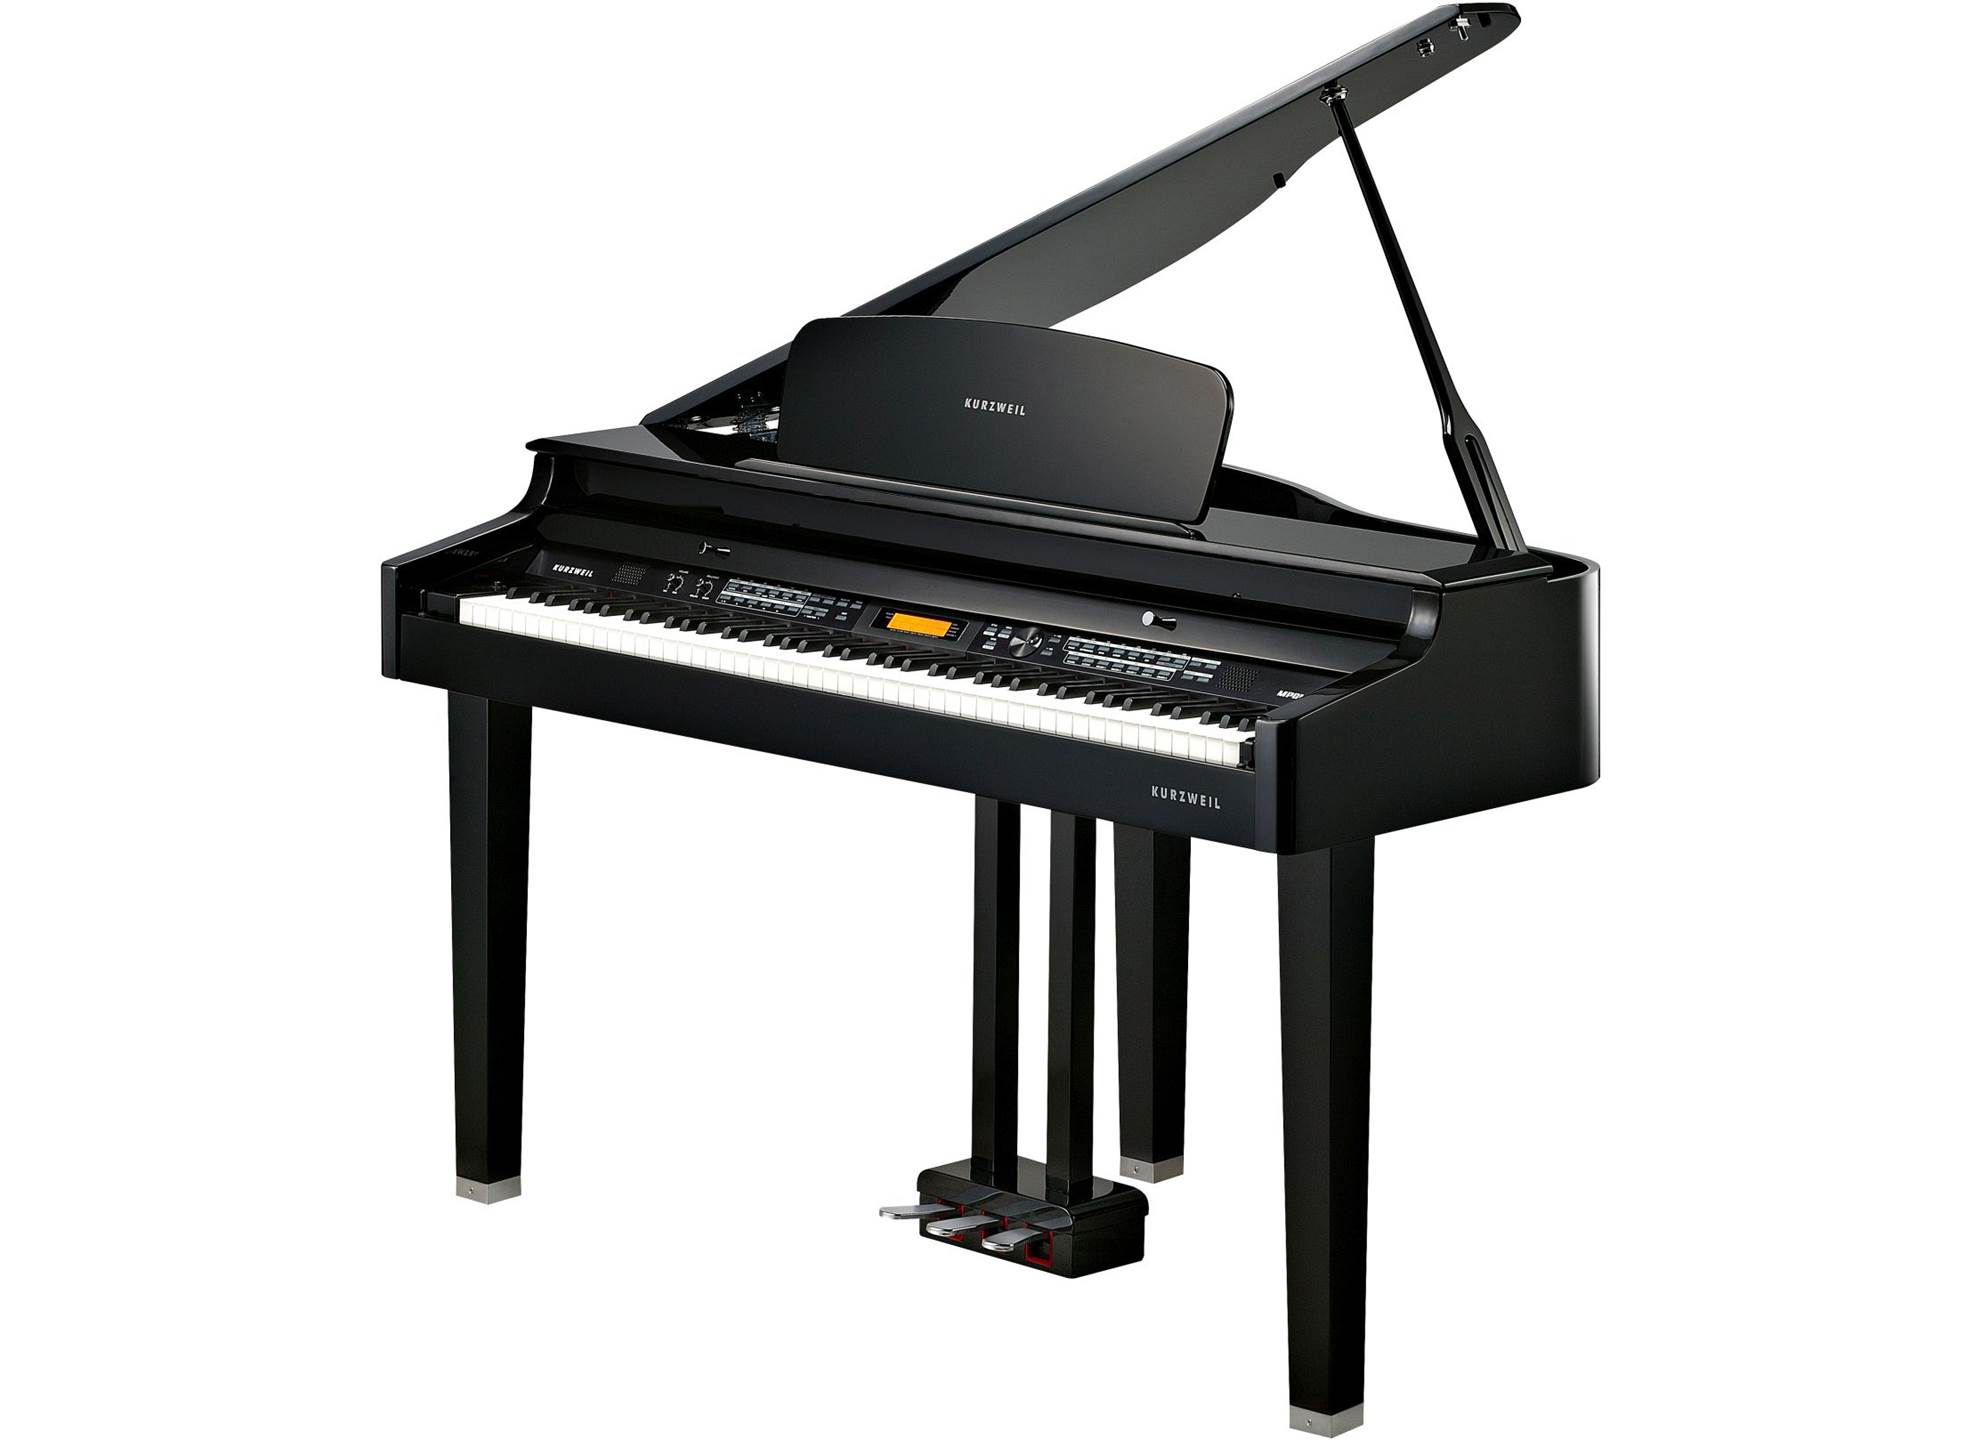 MPG100 Digital Grand Piano Digitalpiano Polerad Svart